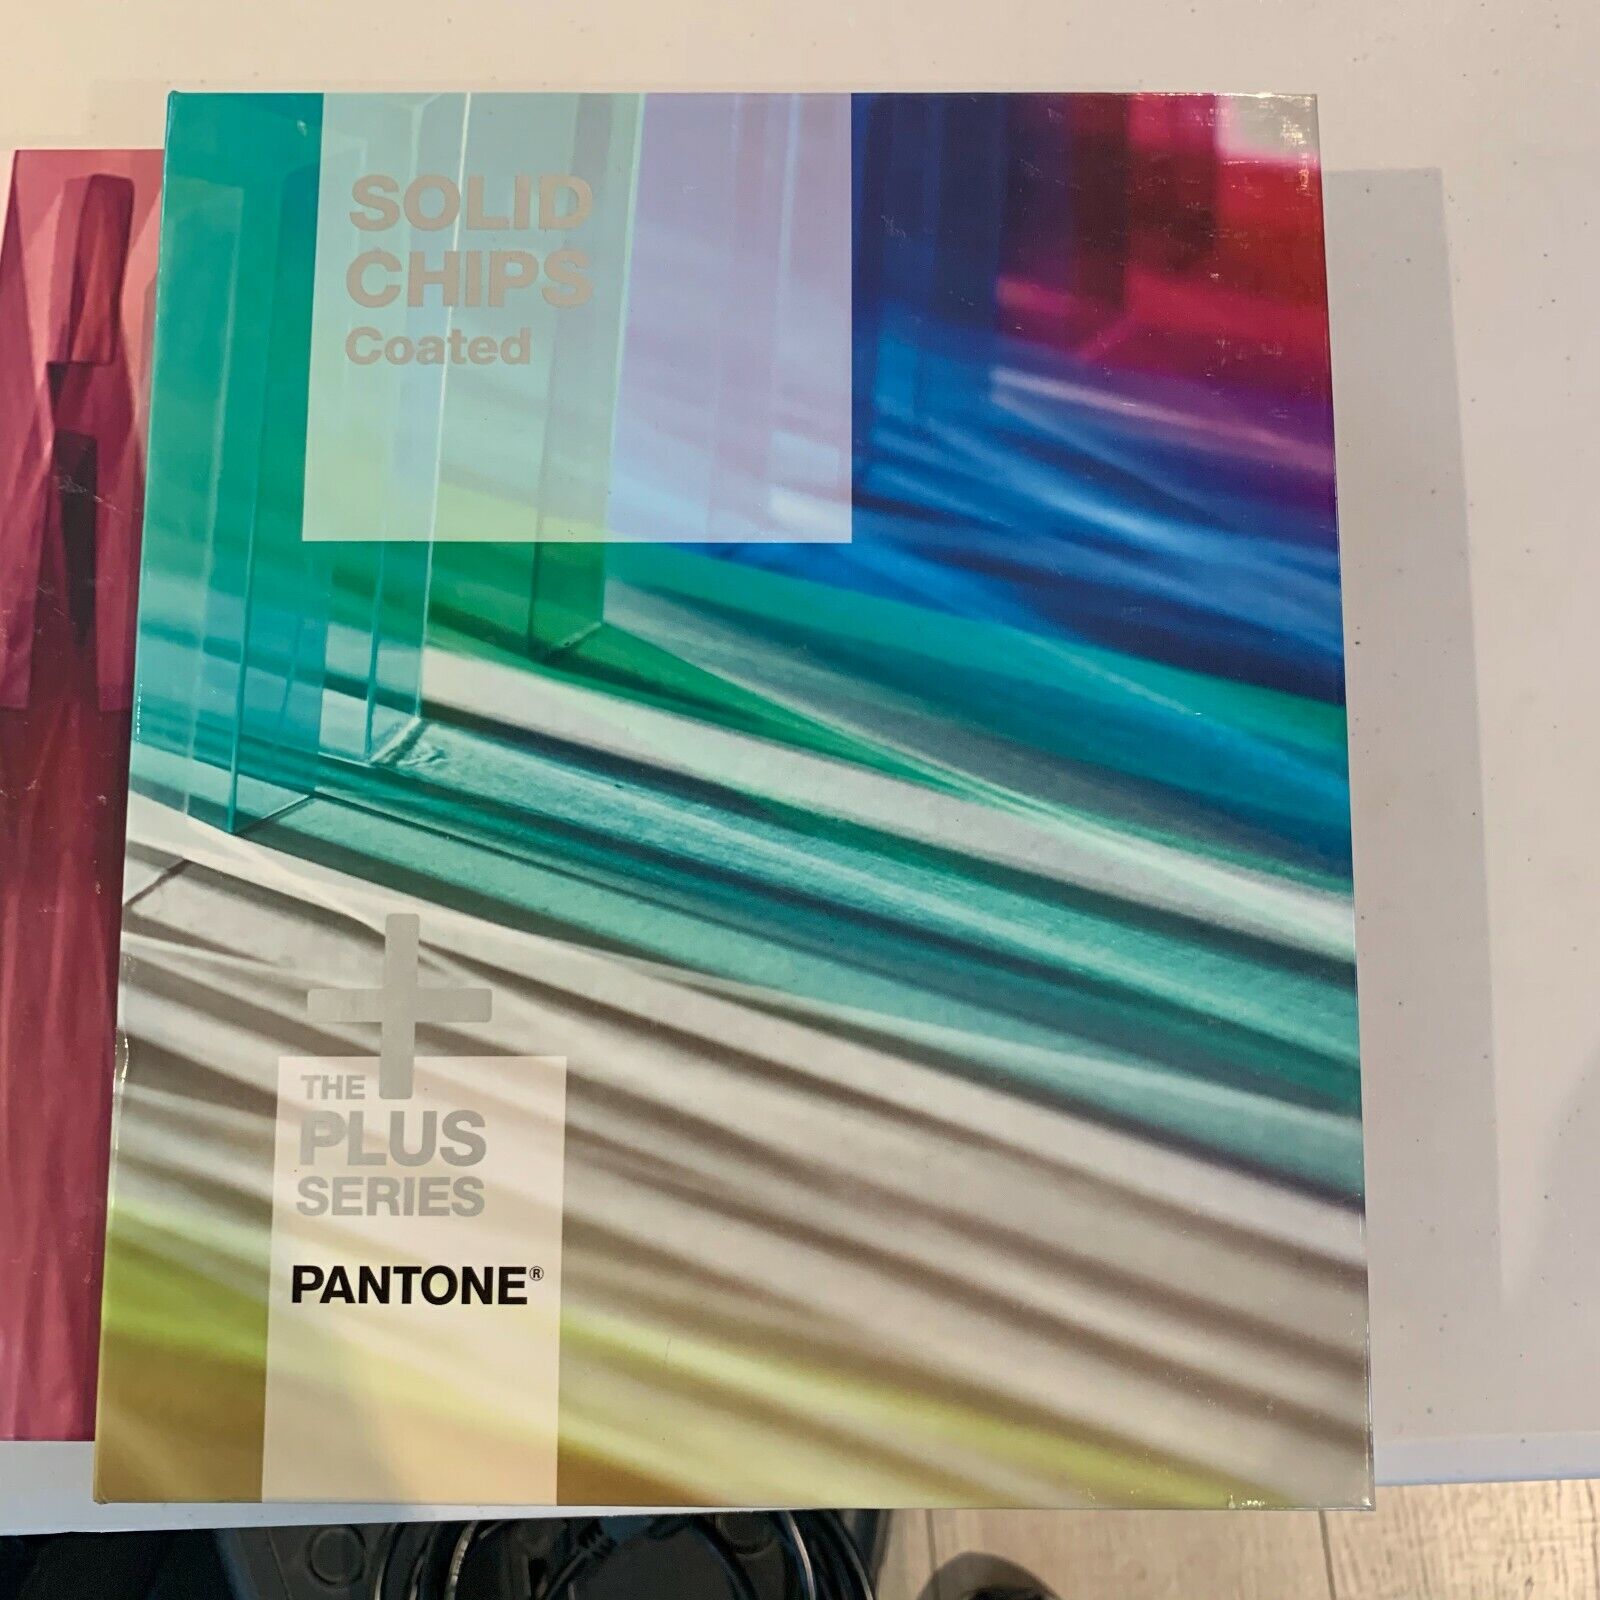  PANTONE GP1503 Plus Series Solid Chips, 2 Book Set